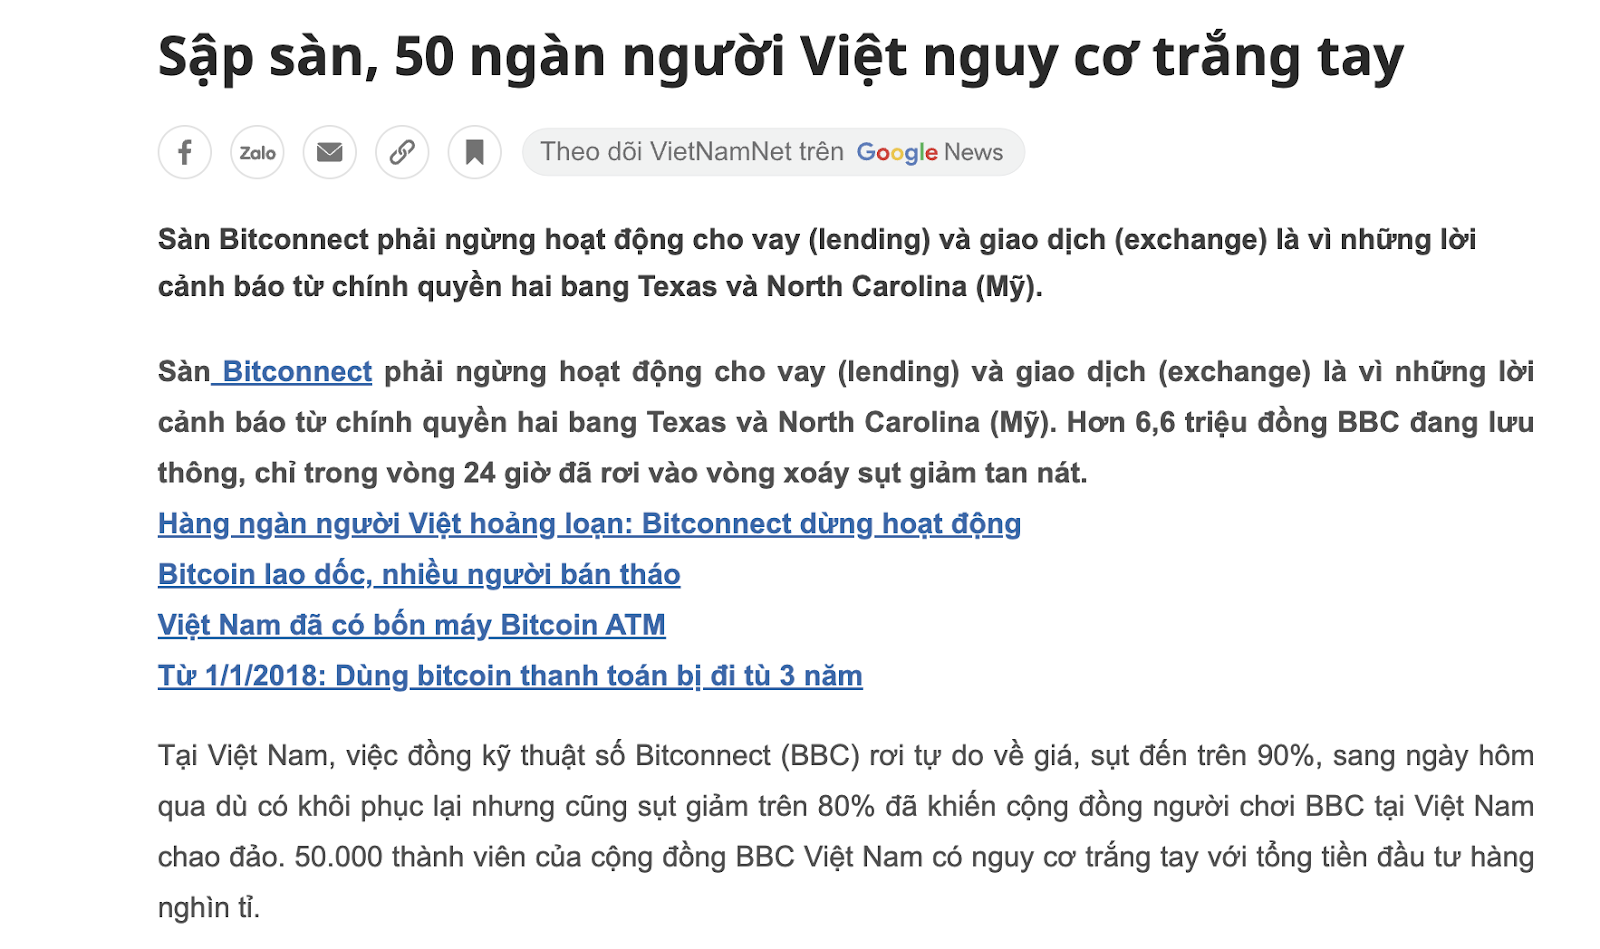 <a href="https://vietnamnet.vn/sap-san-50-ngan-nguoi-viet-nguy-co-trang-tay-424517.html">https://vietnamnet.vn/sap-san-50-ngan-nguoi-viet-nguy-co-trang-tay-424517.html</a>